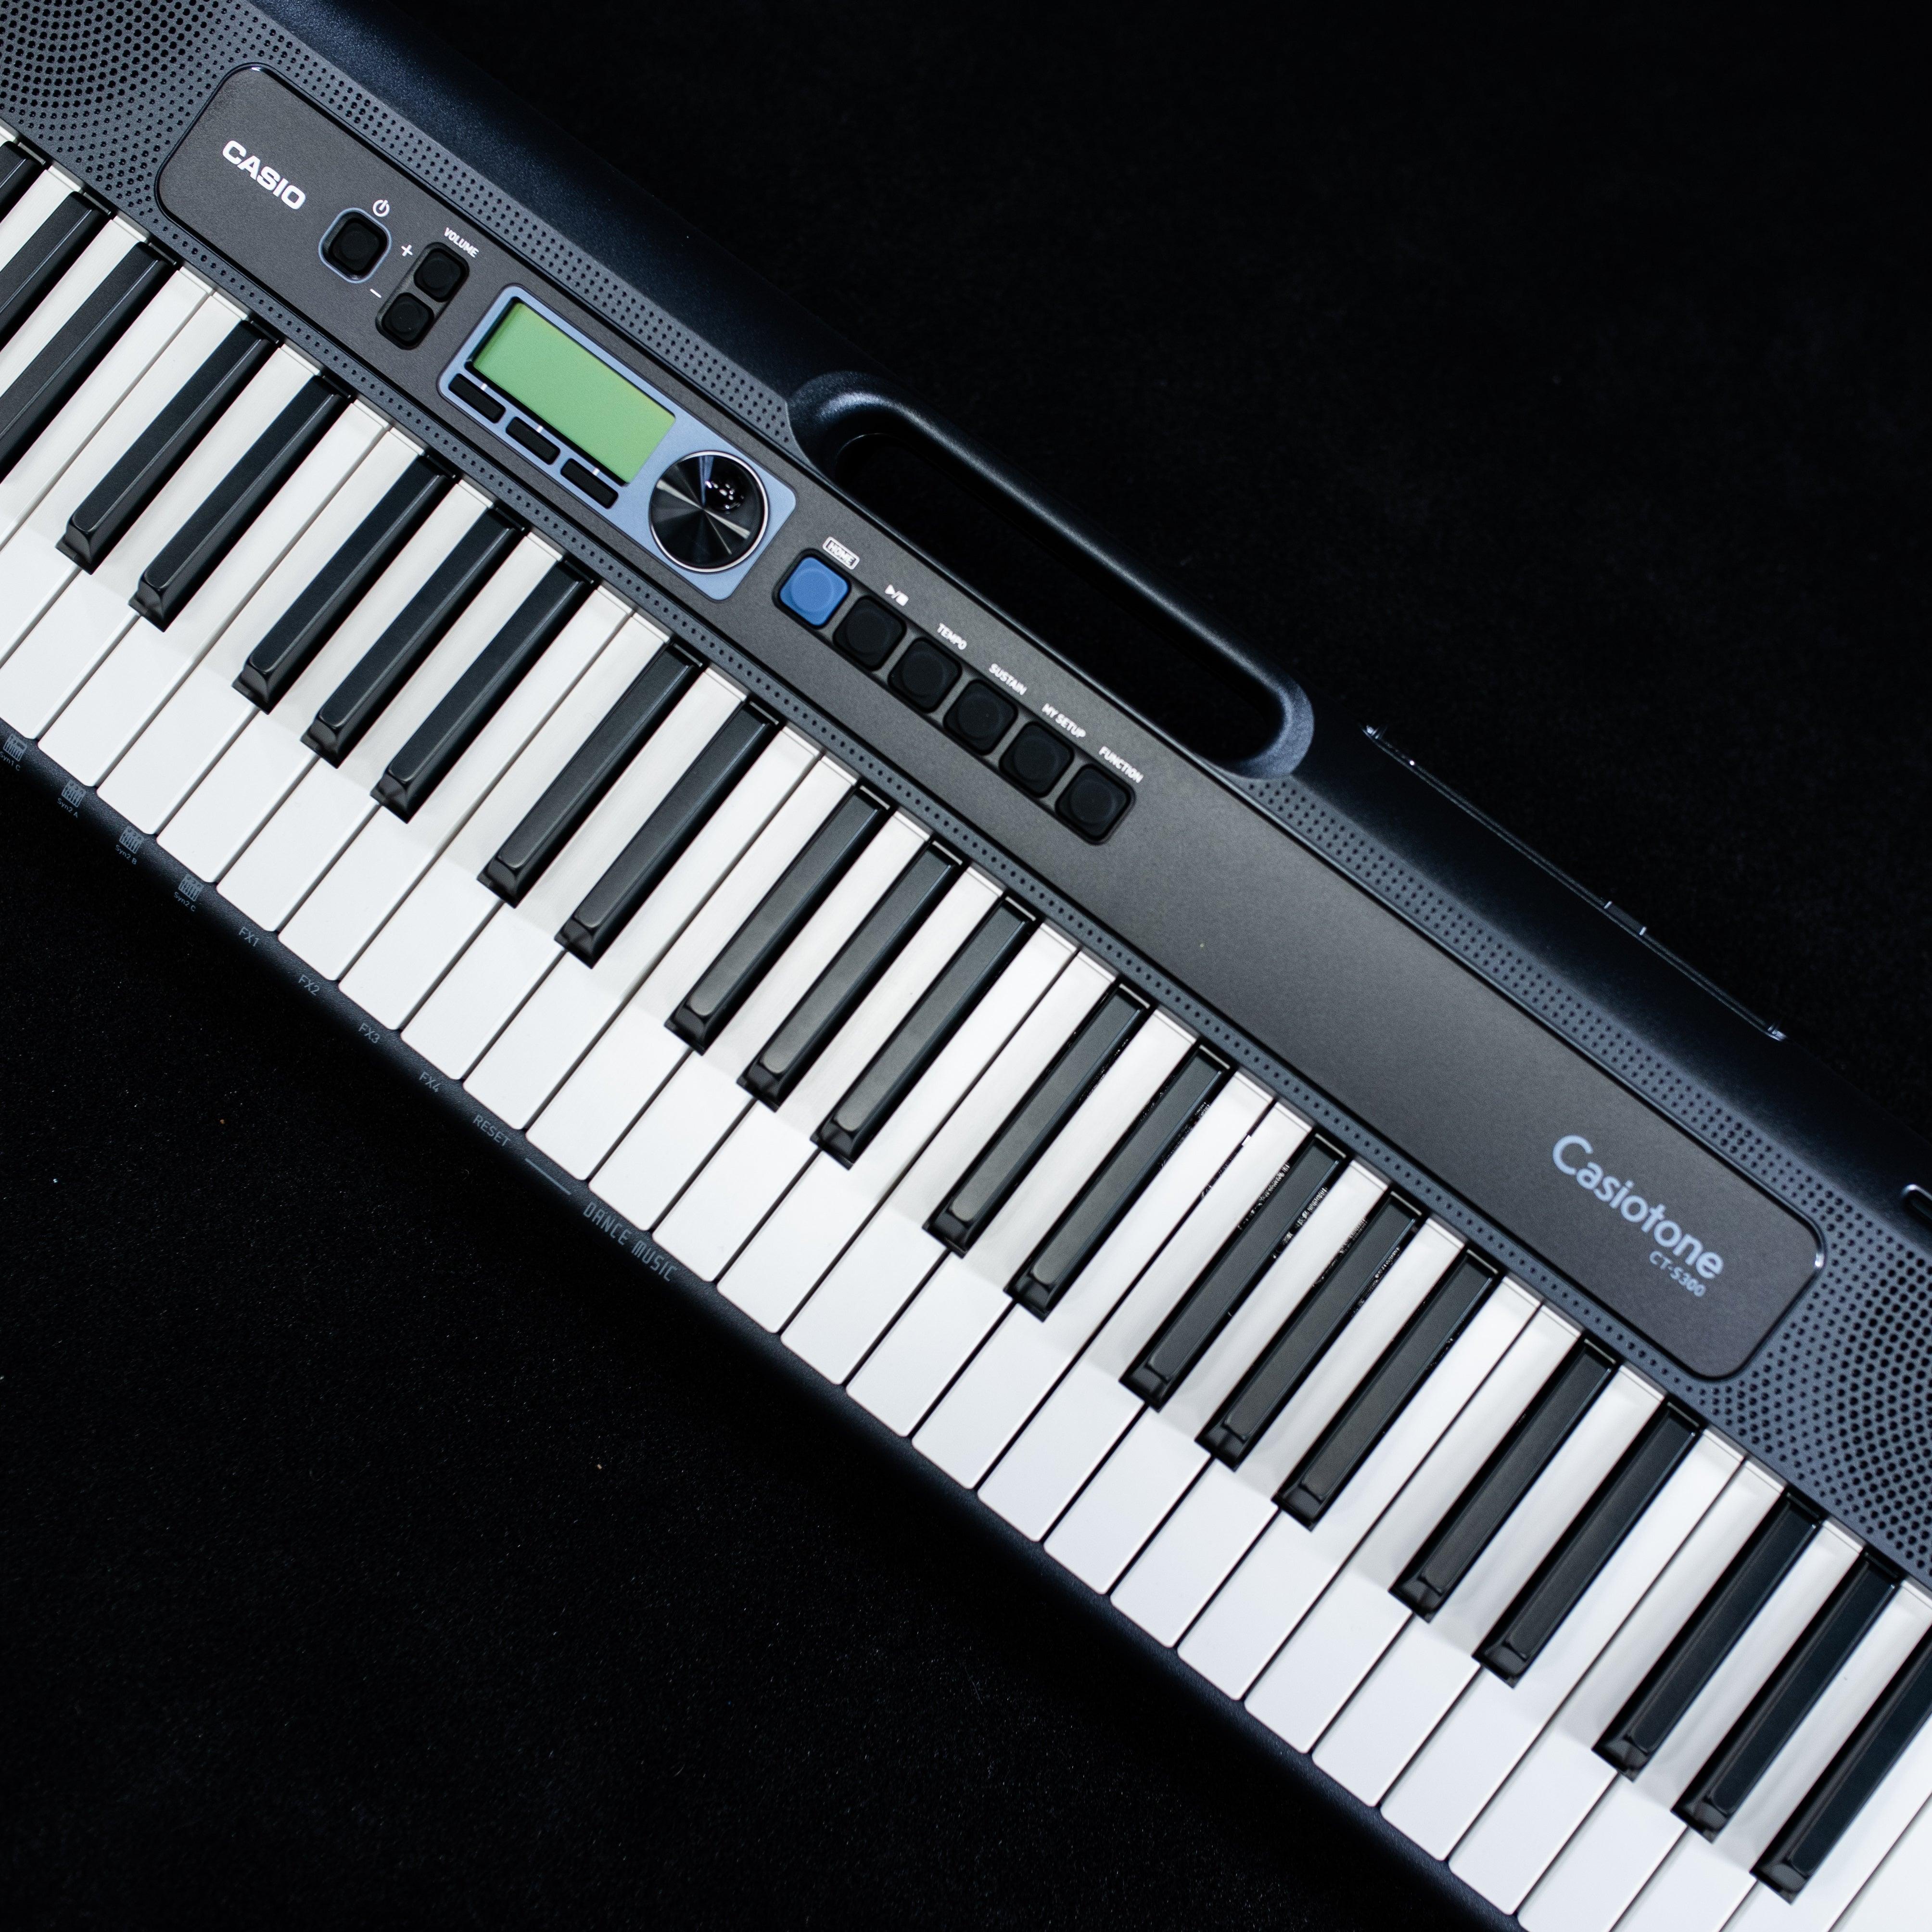 Casio Casiotone CT-S300 Portable Keyboard - Impulse Music Co.